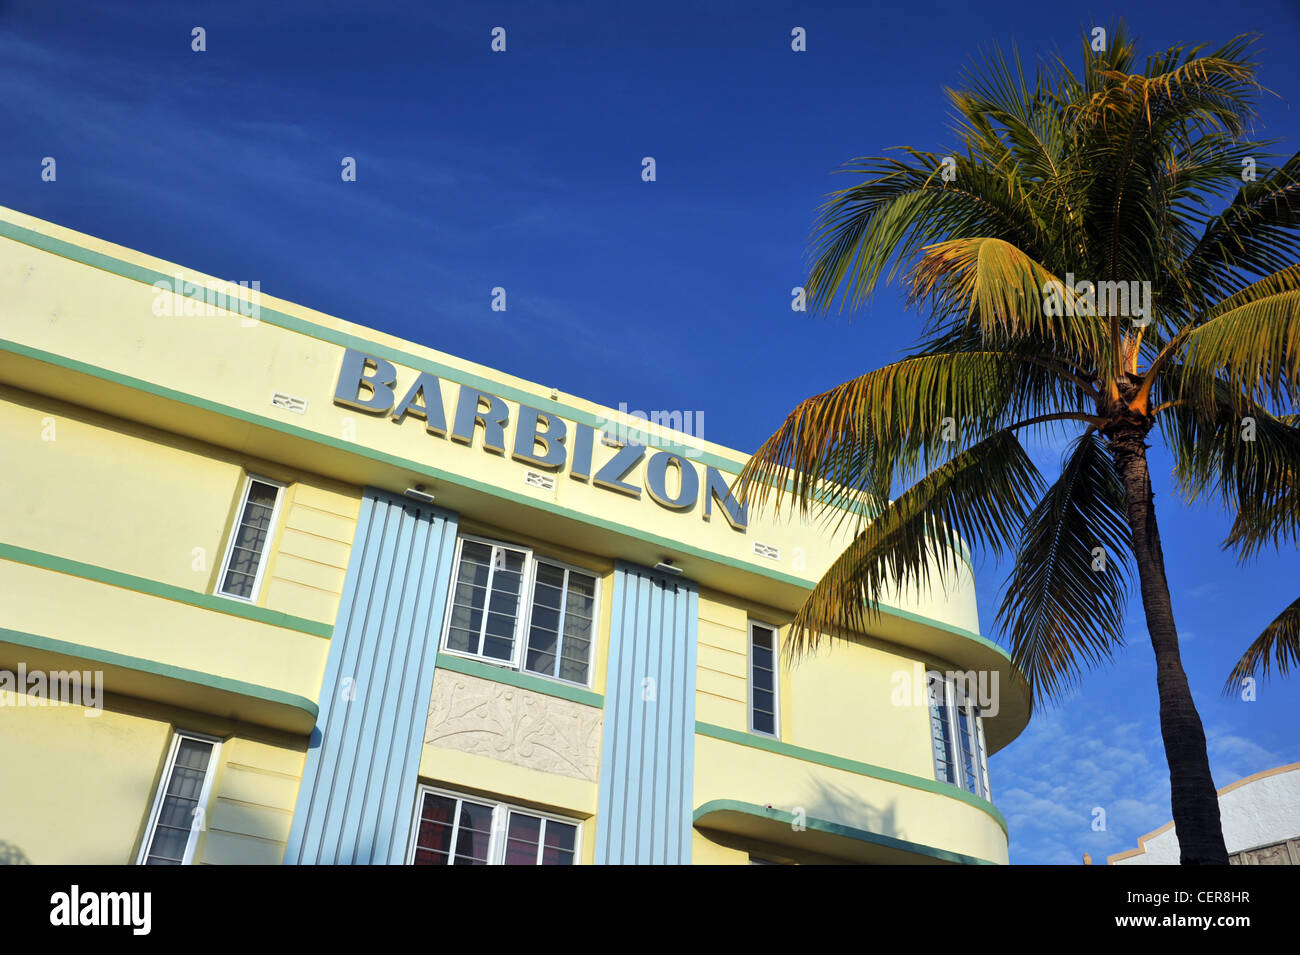 Barbizon Hôtel Florida, Miami, USA Banque D'Images